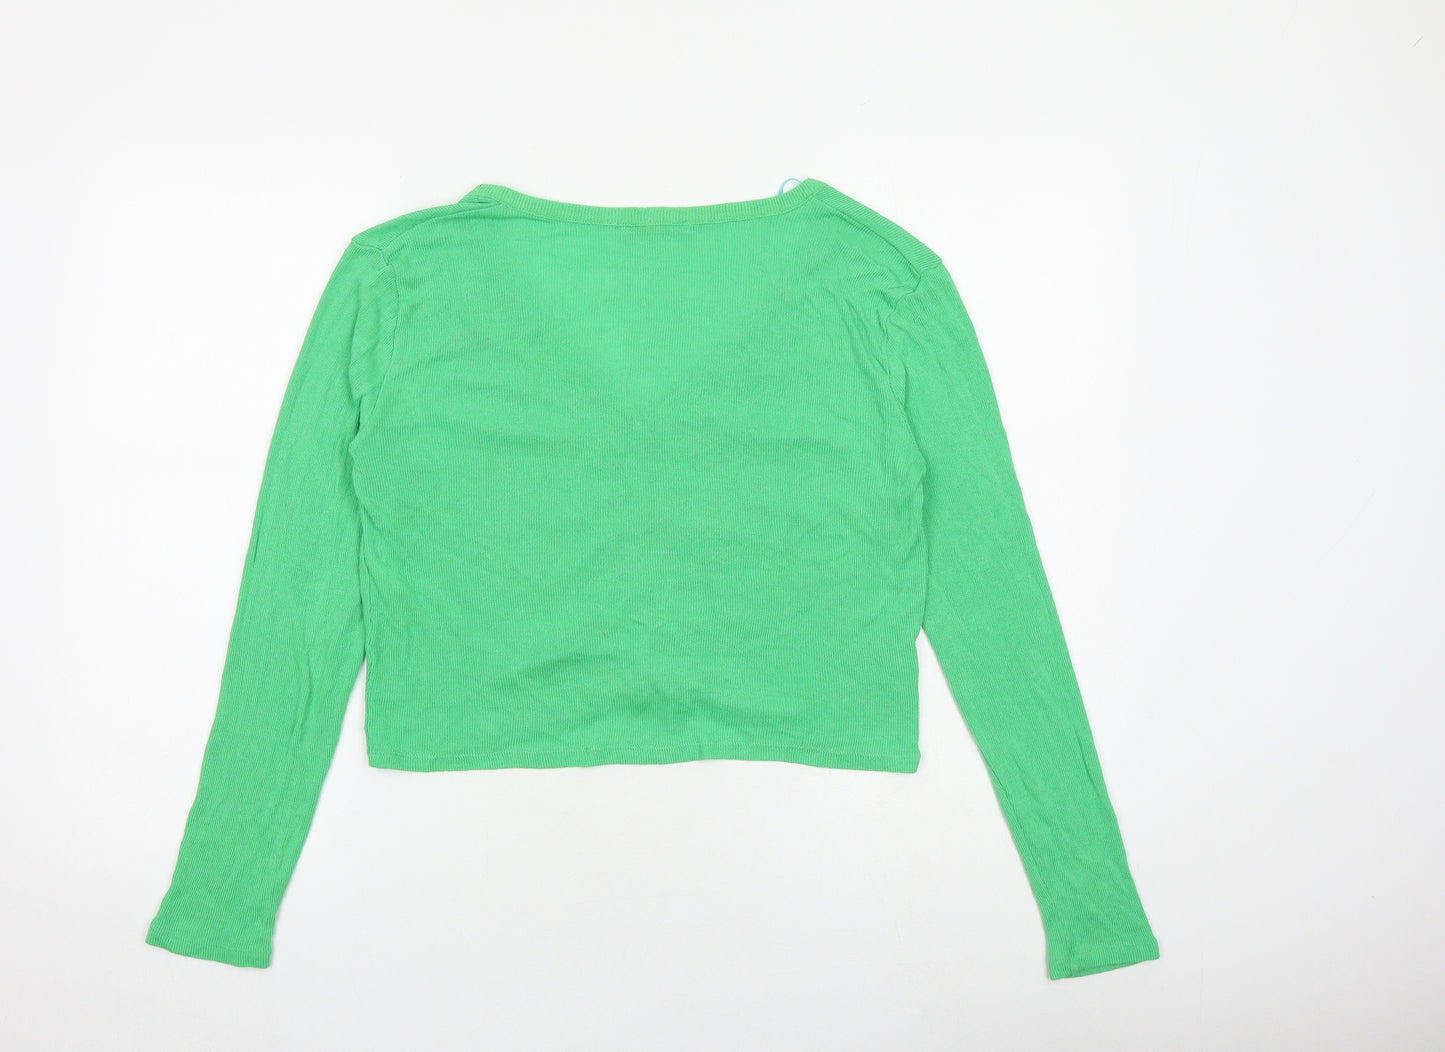 Zara Womens Green V-Neck Viscose Cardigan Jumper Size M